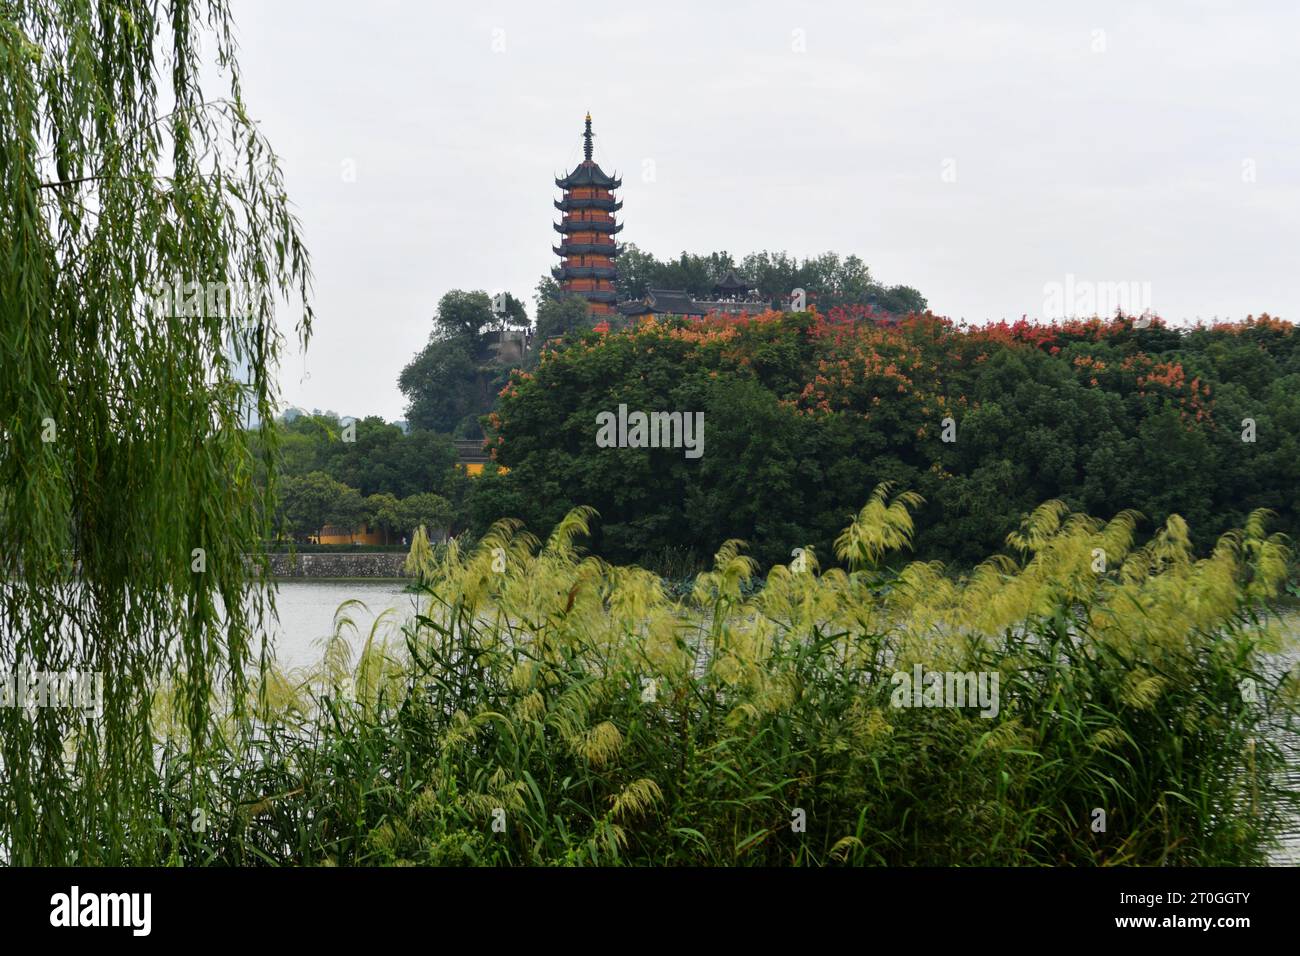 Photo of Jinshan Temple, the famous ancient Chinese building, located in Zhenjiang City, Jiangsu Province, China Stock Photo